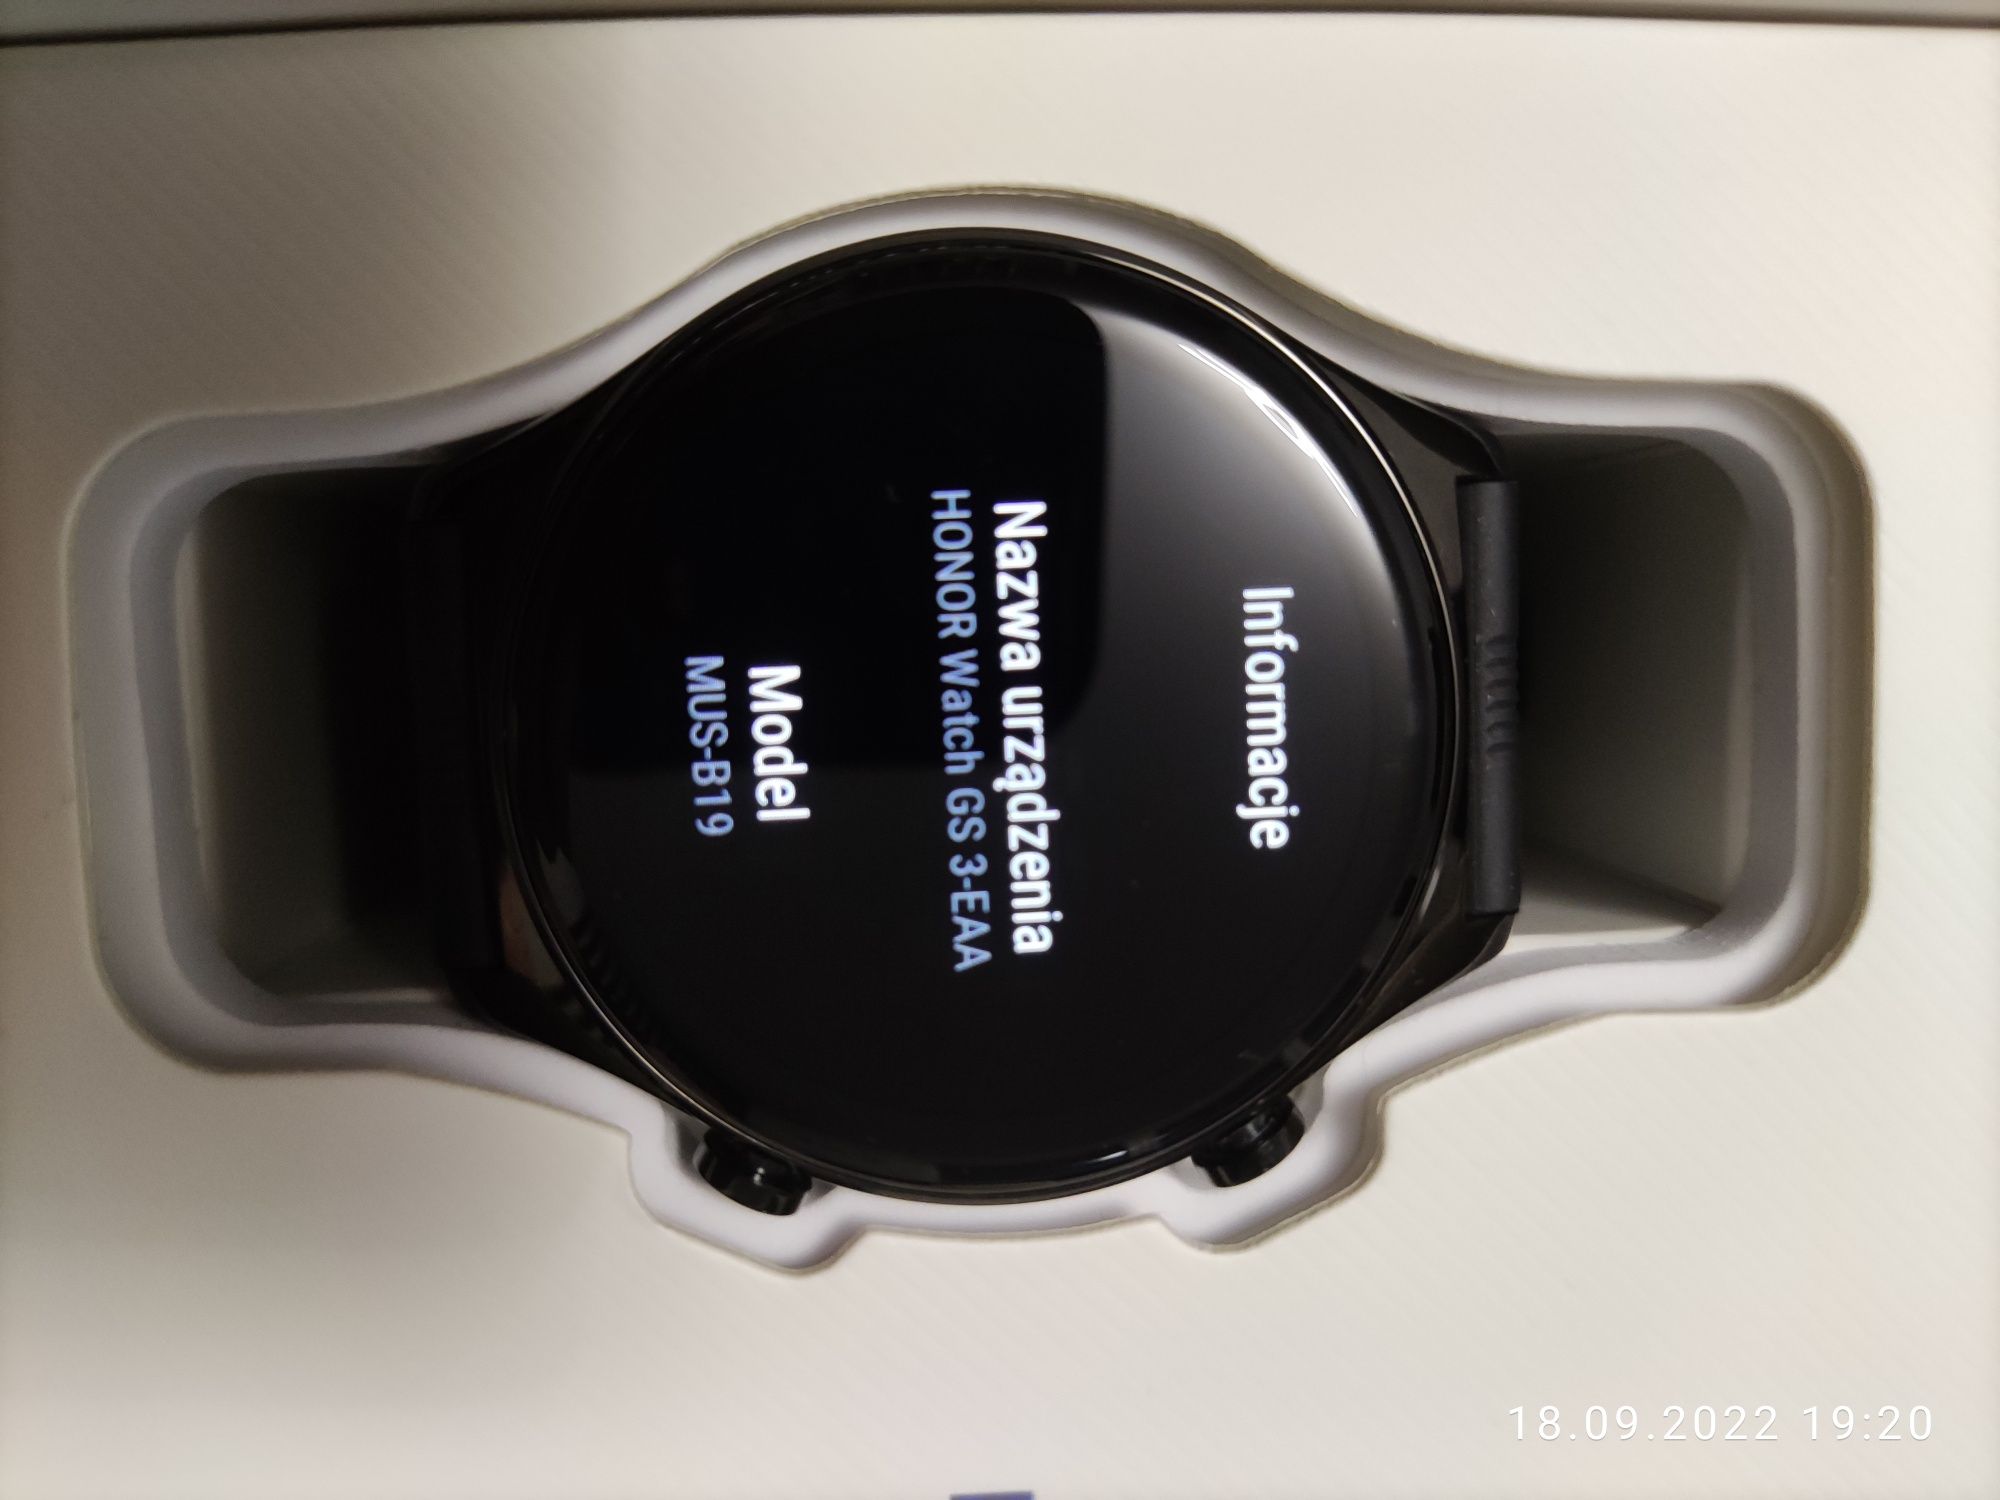 Smartwatch Honor GS 3